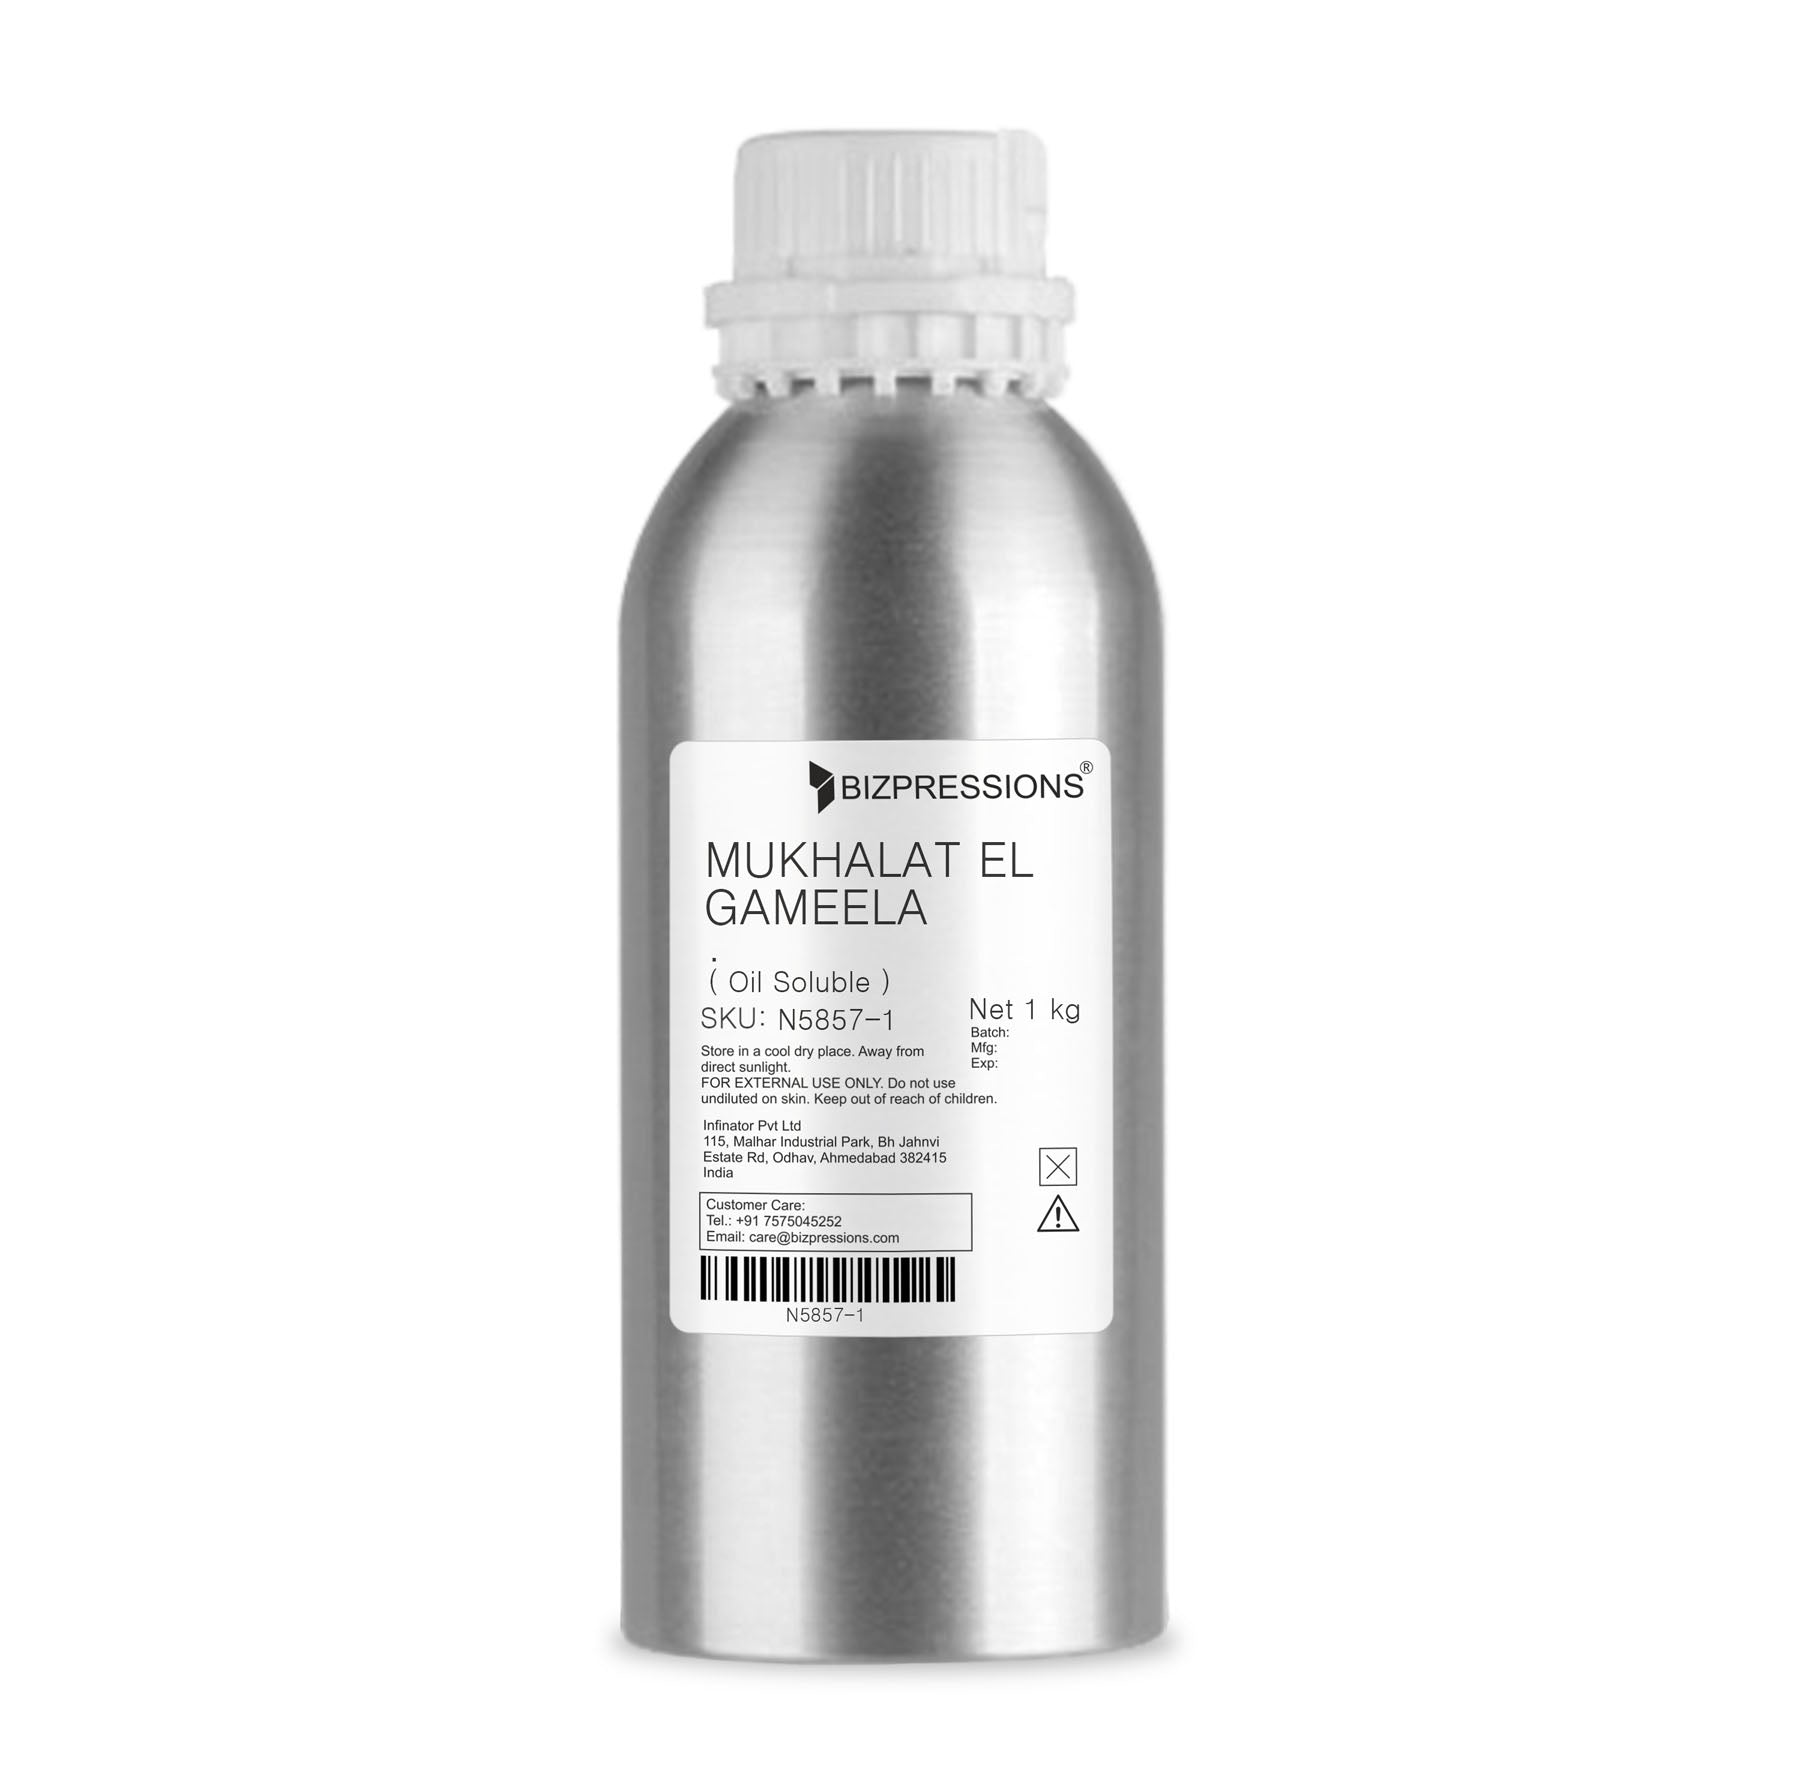 MUKHALAT EL GAMEELA - Fragrance ( Oil Soluble ) - 1 kg